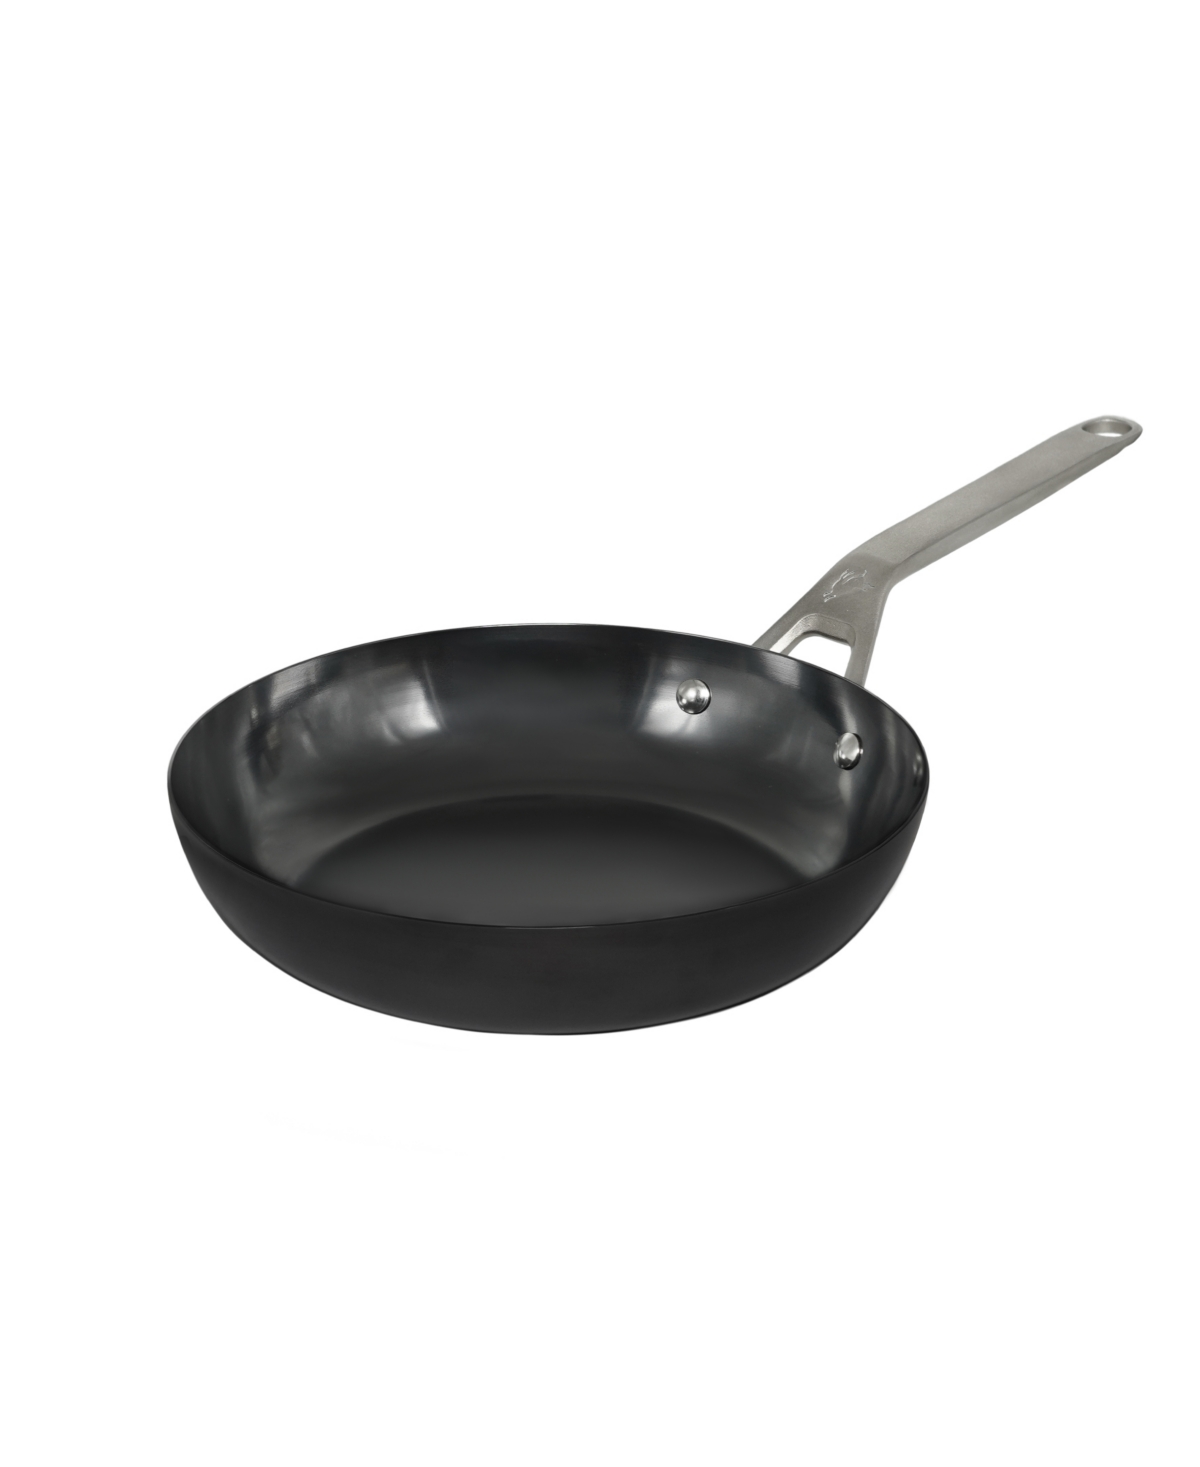 Saveur Selects Carbon Steel 10" Fry Pan In Nitri-black